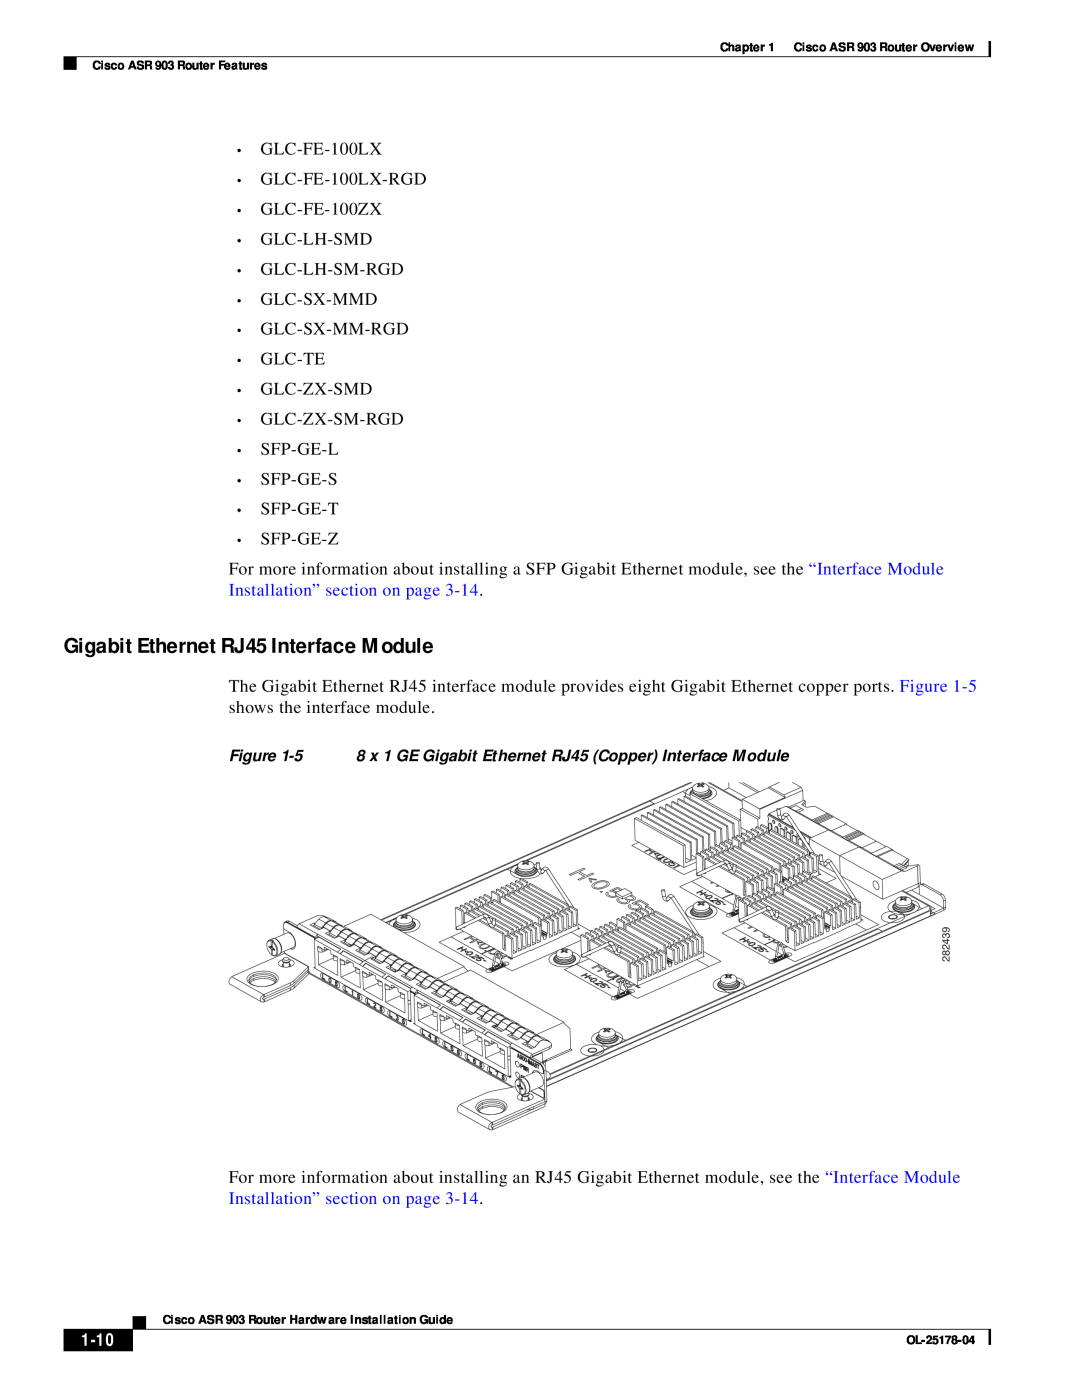 Cisco Systems ASR 903 manual Gigabit Ethernet RJ45 Interface Module, 1-10 